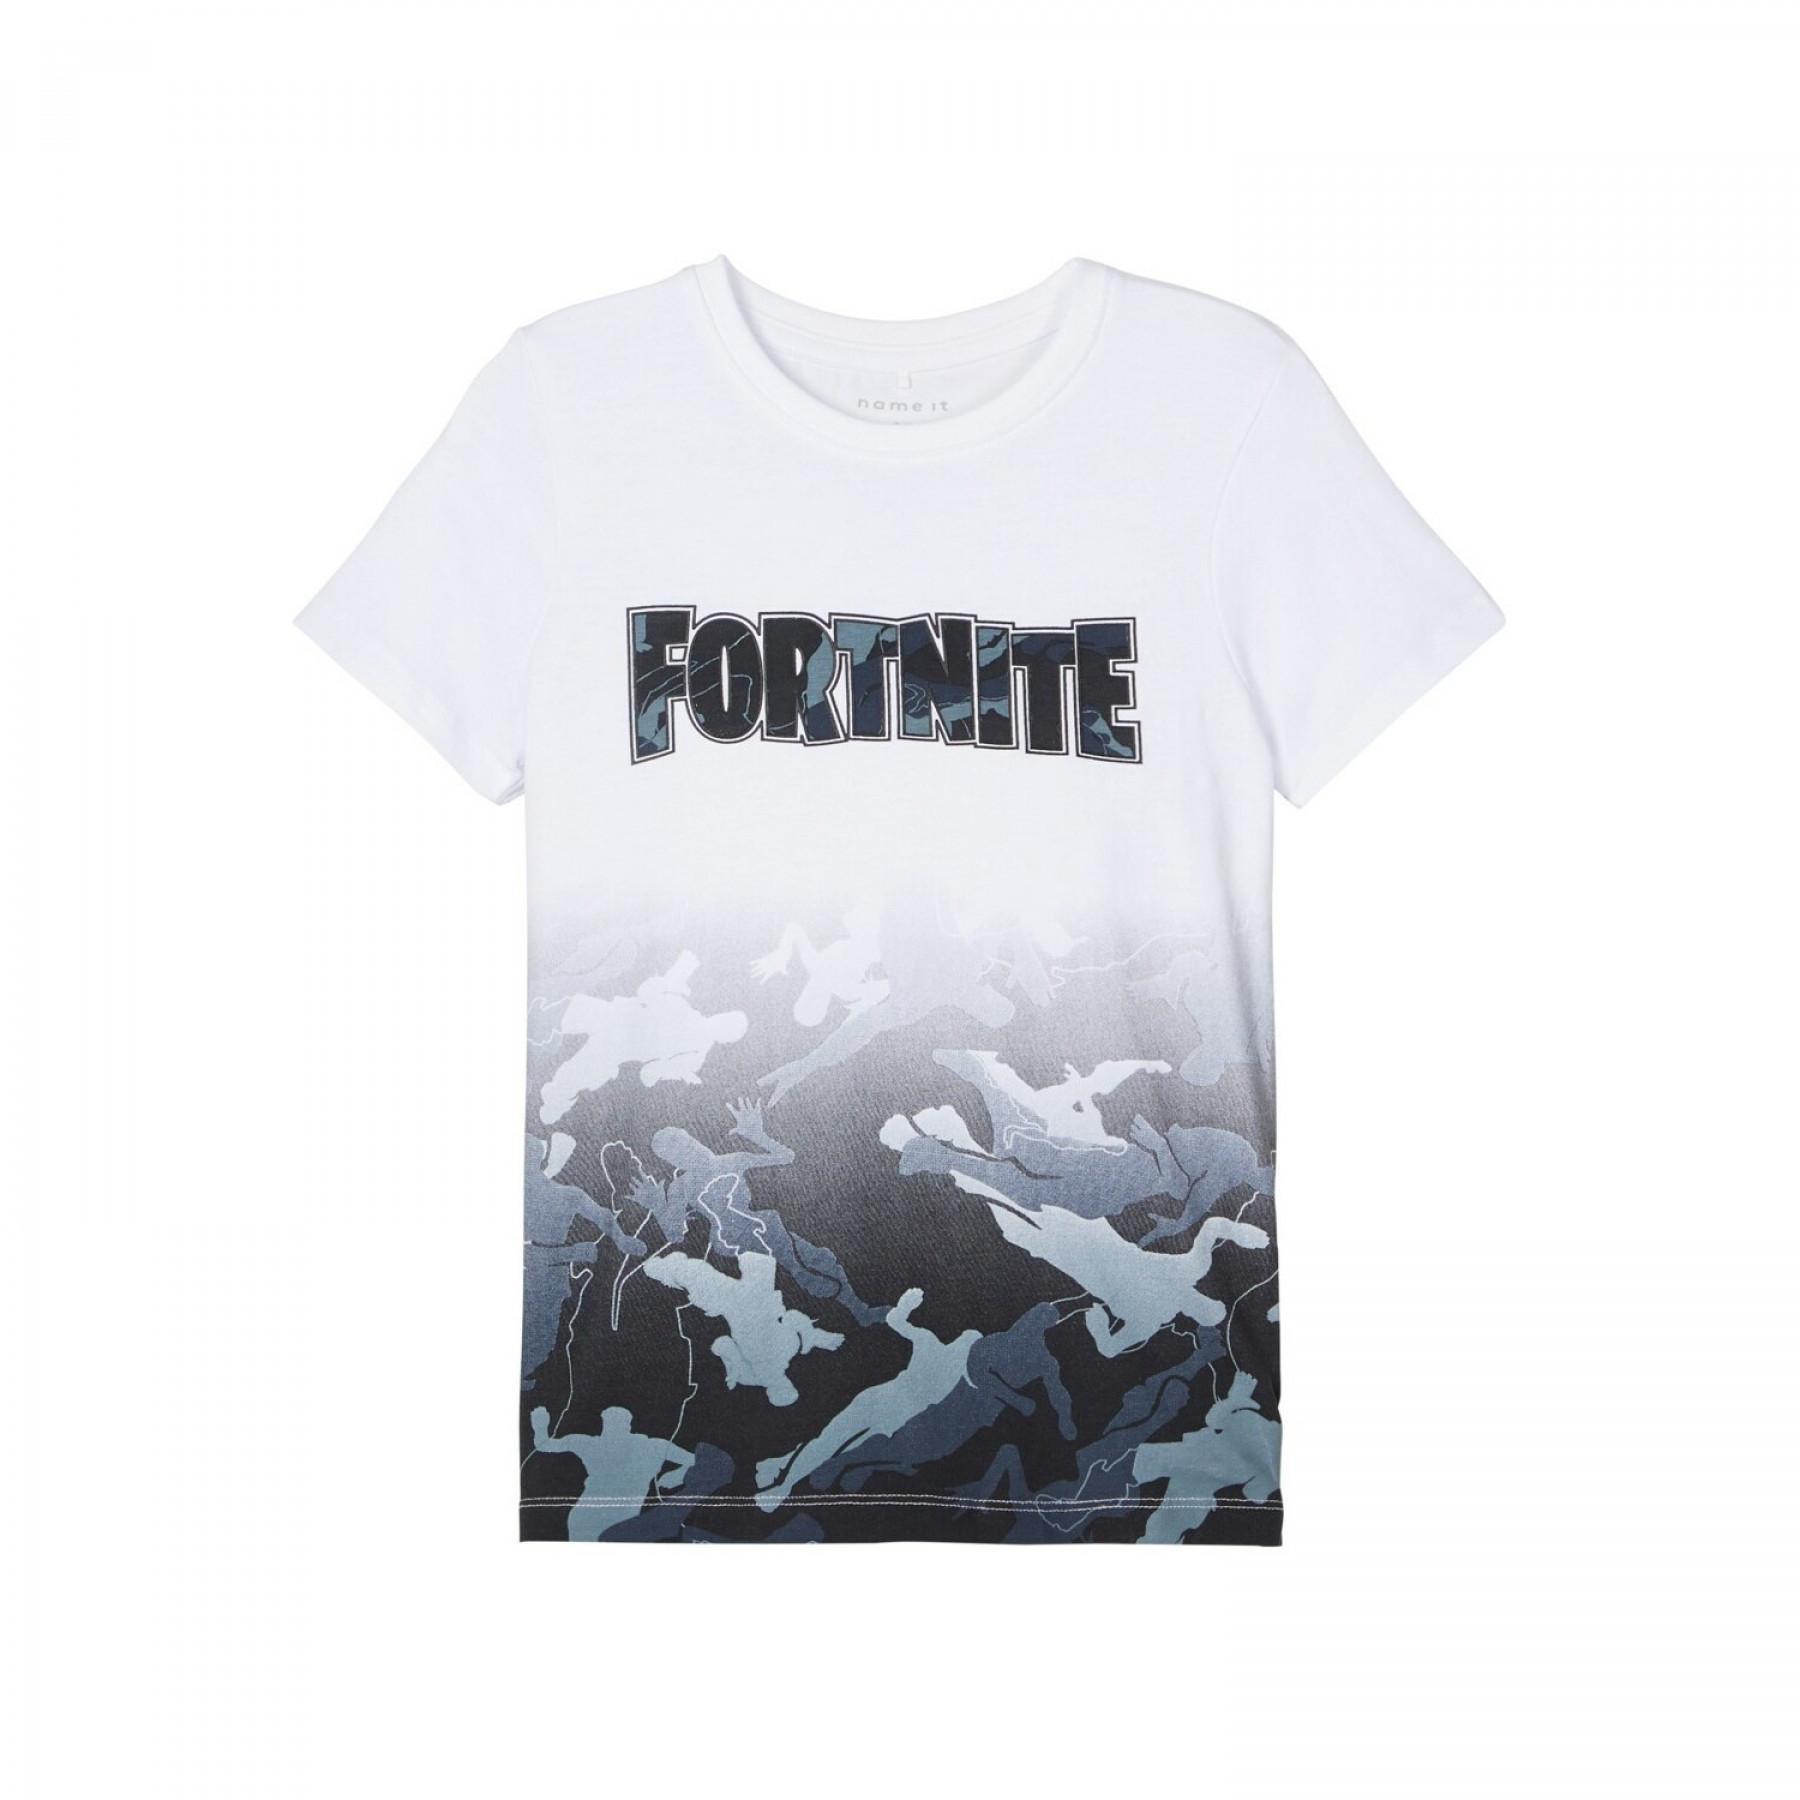 Koszulka chłopięca Name it Fortnite